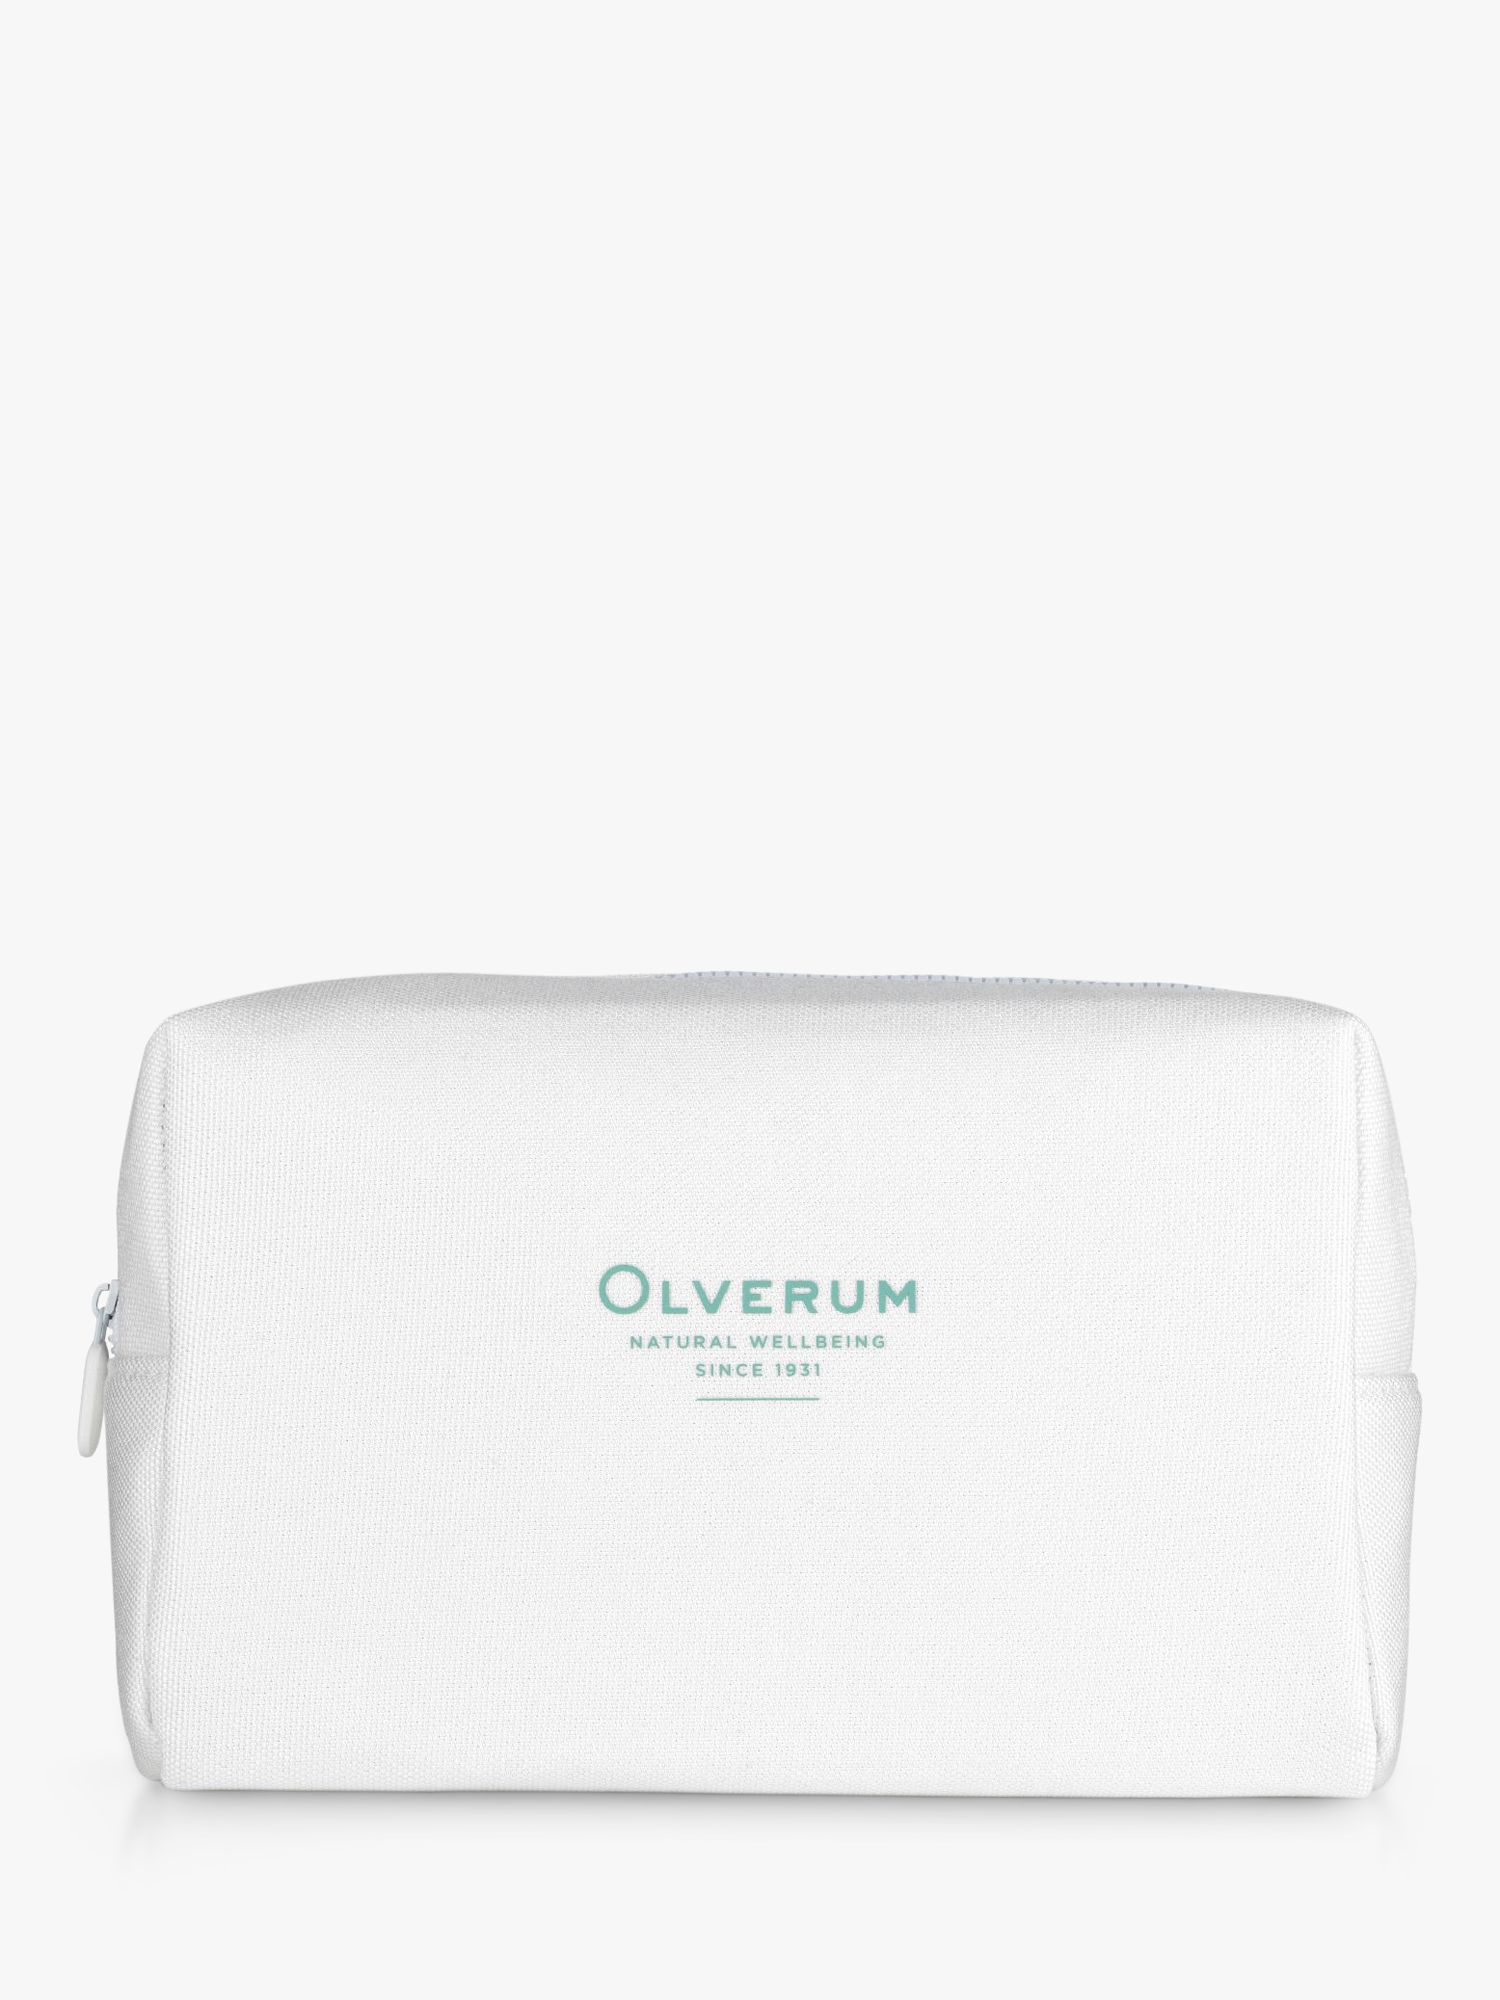 Olverum Sleep Ritual Bodycare Gift Set 4